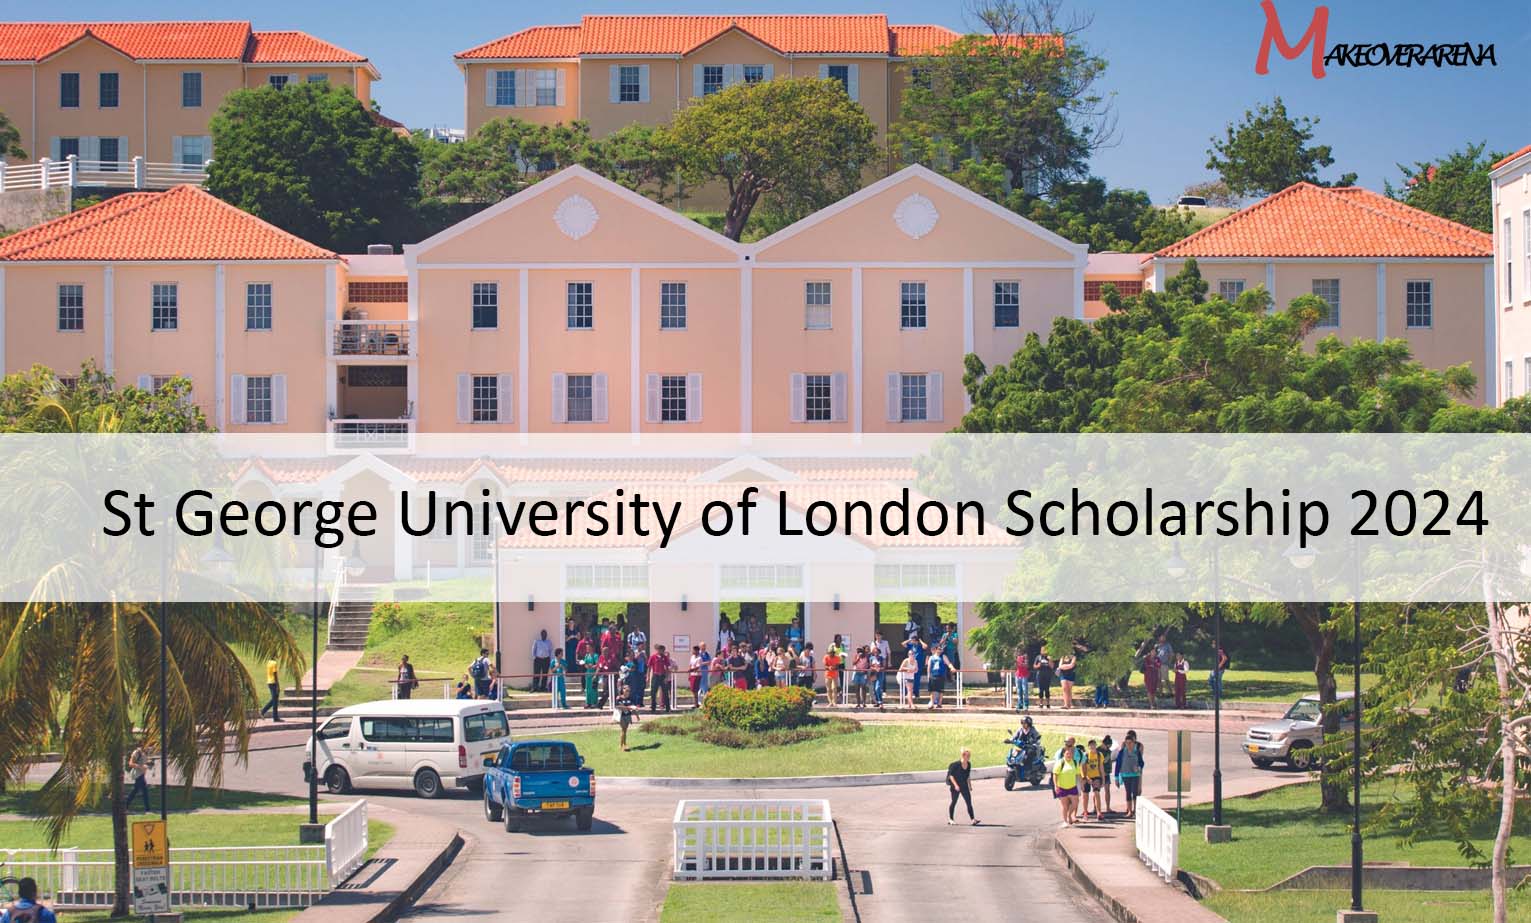 St George University of London Scholarship 